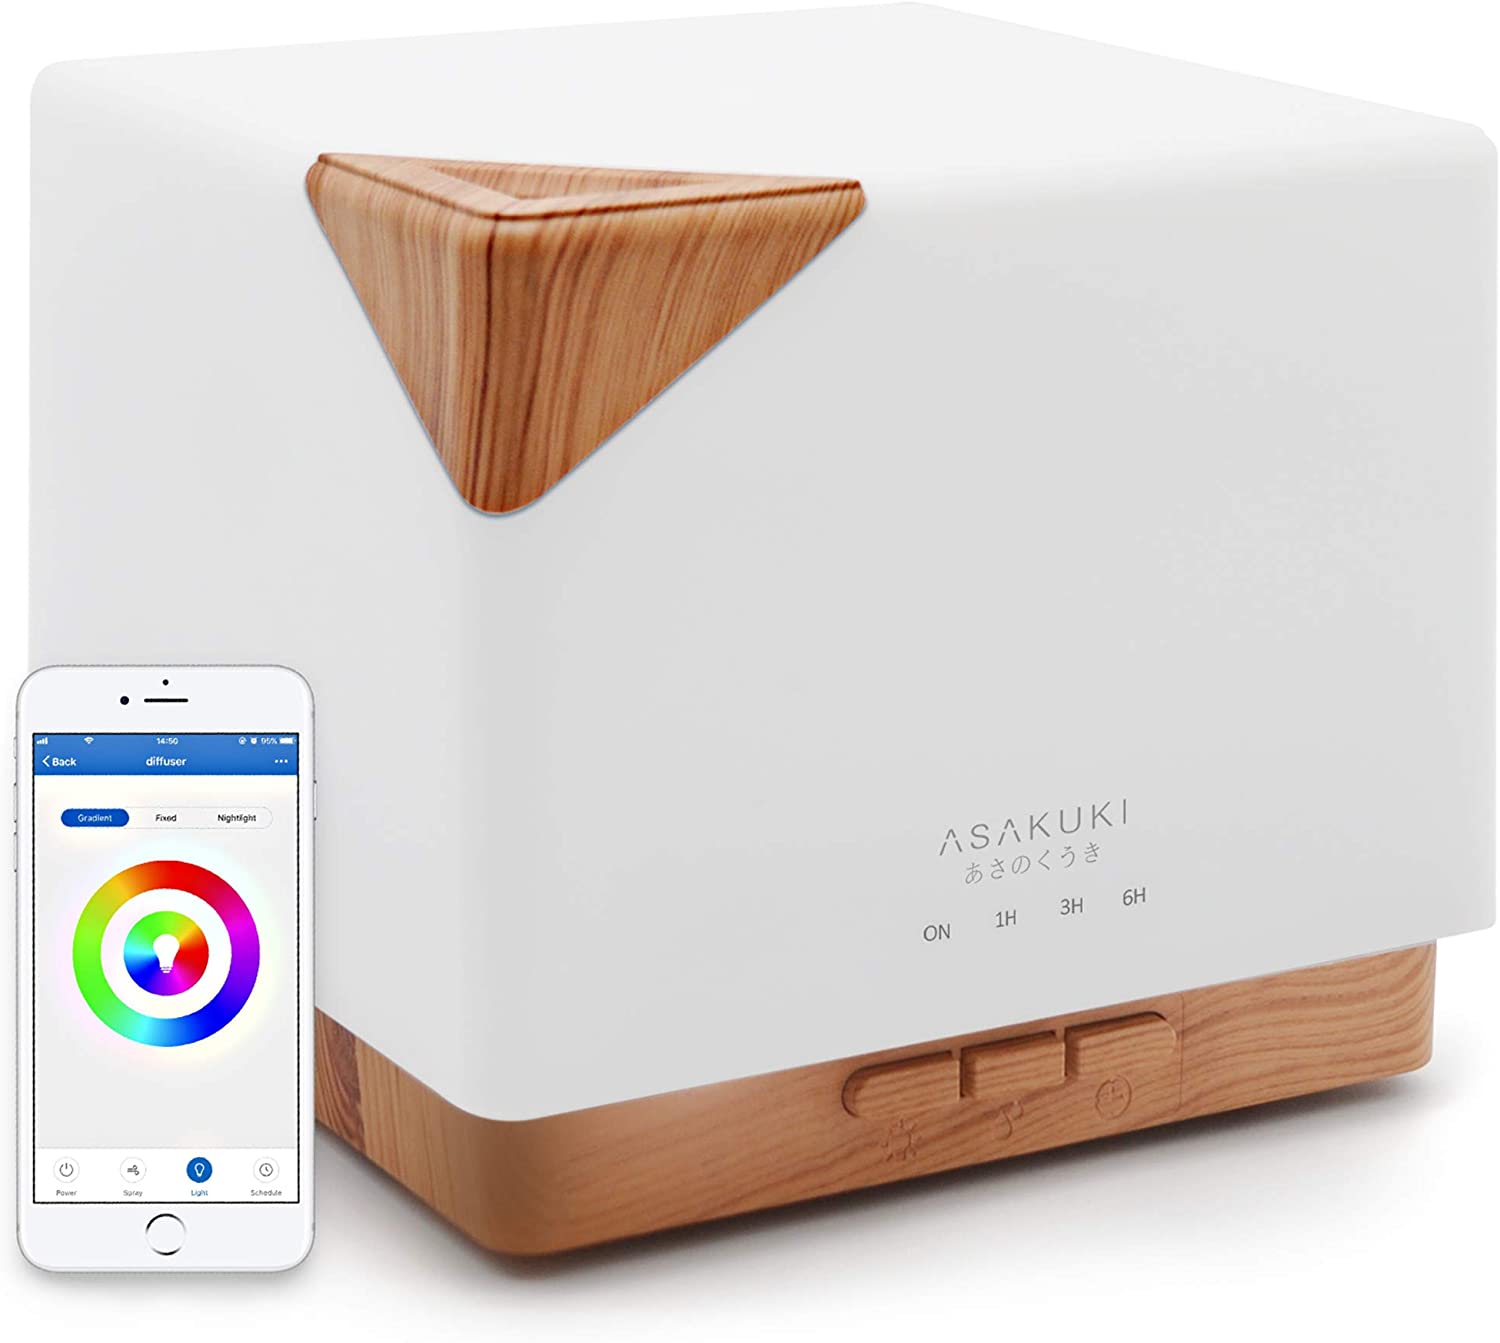 Review of ASAKUKI Smart WiFi Essential Oil Aromatherapy Diffuser